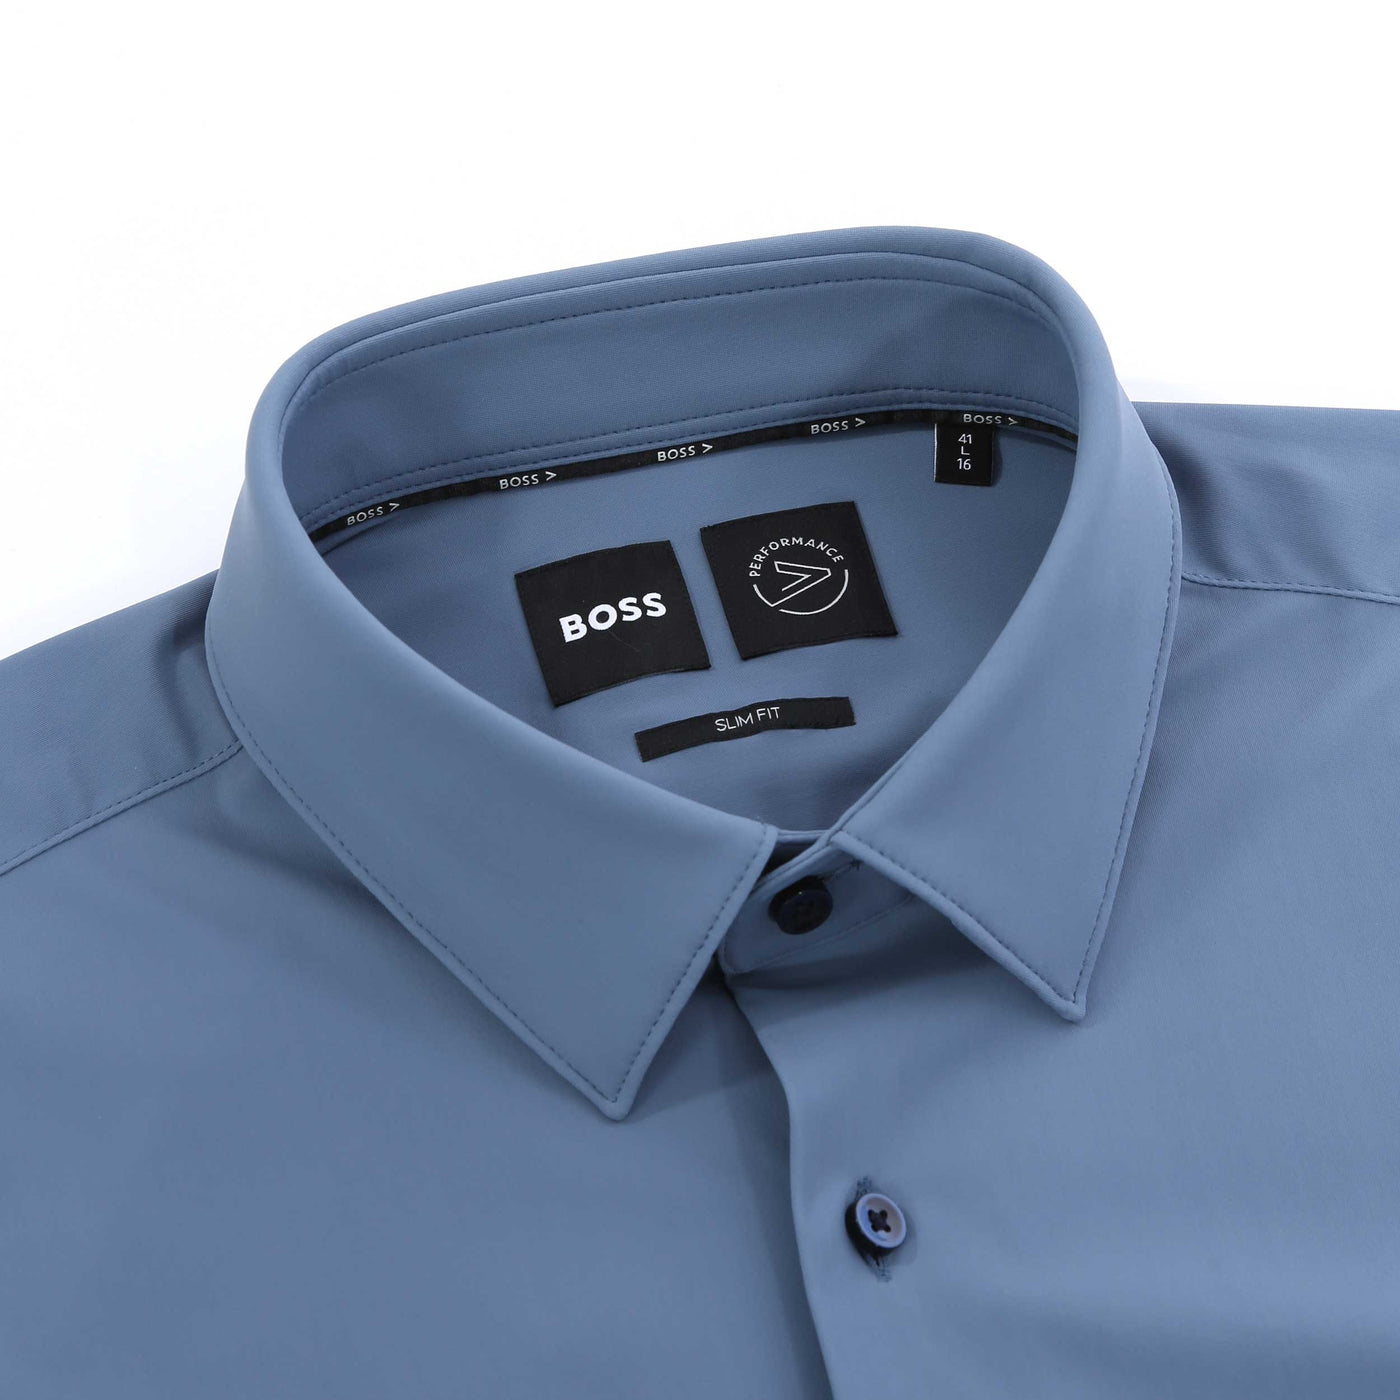 BOSS P Hank S Kent C1 222 Shirt in Bright Blue Collar